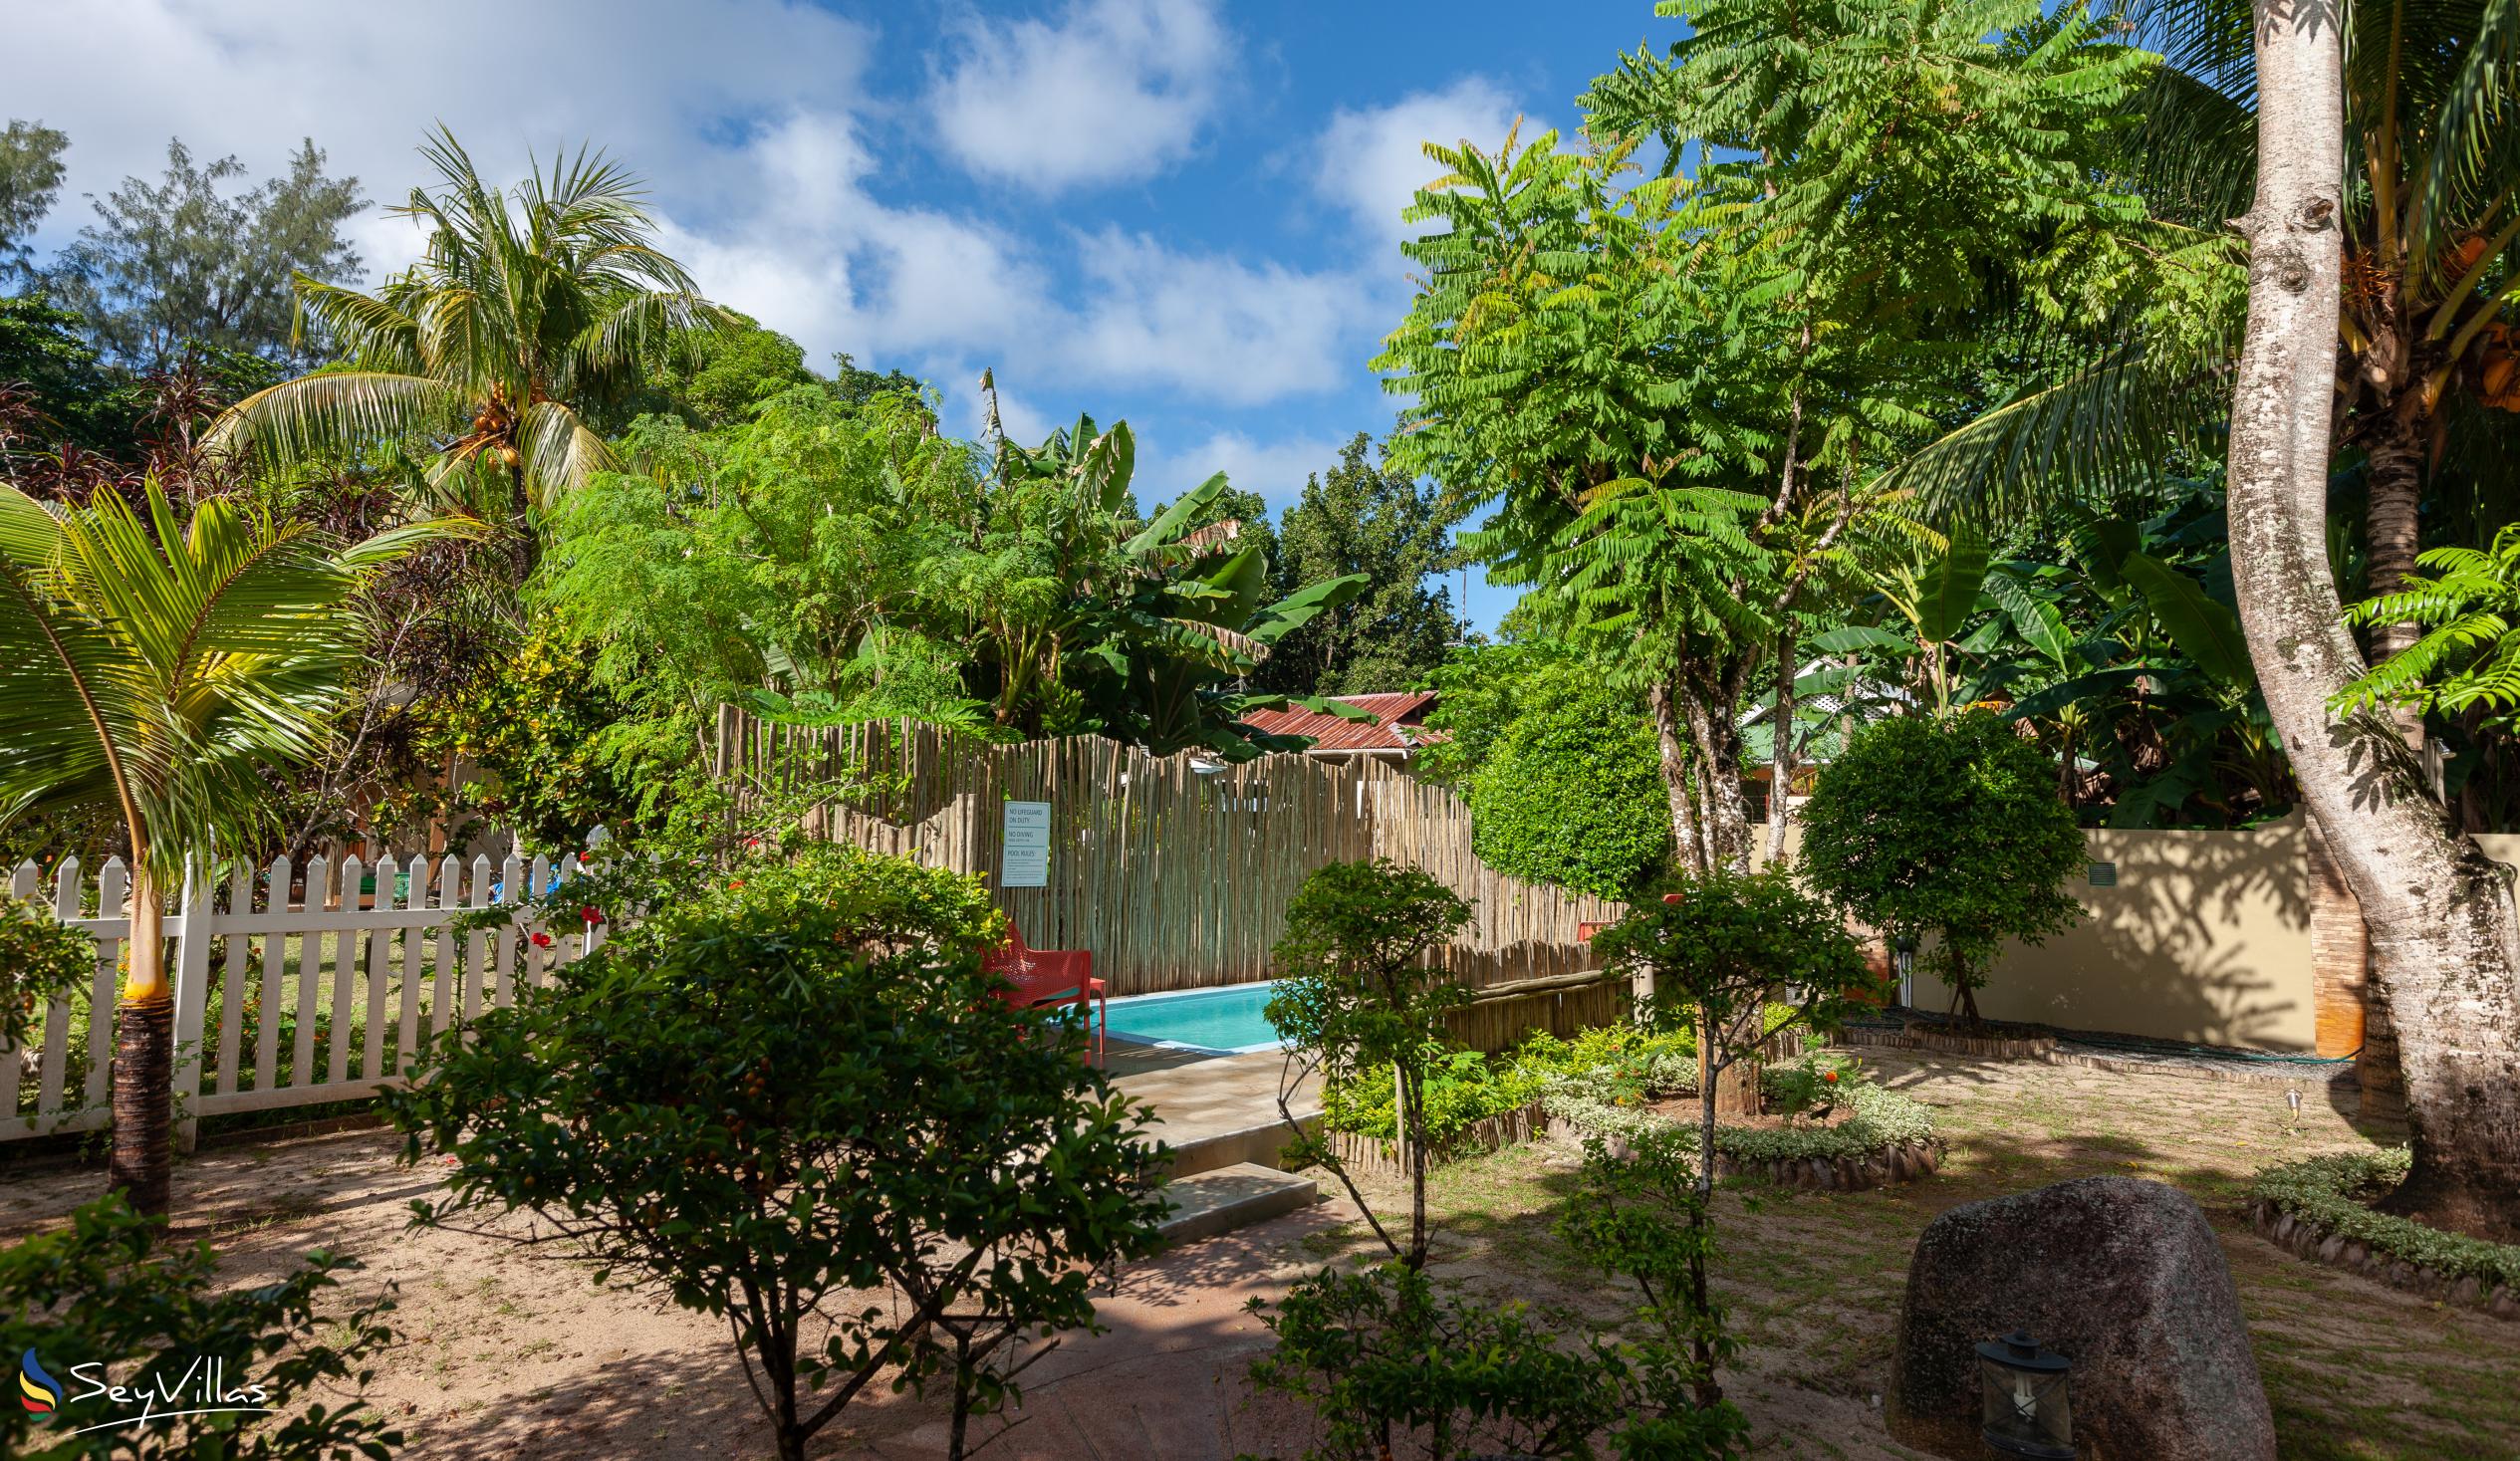 Foto 82: Casa de Leela - Bungalow Luxury con 2 camere e piscina privata - La Digue (Seychelles)